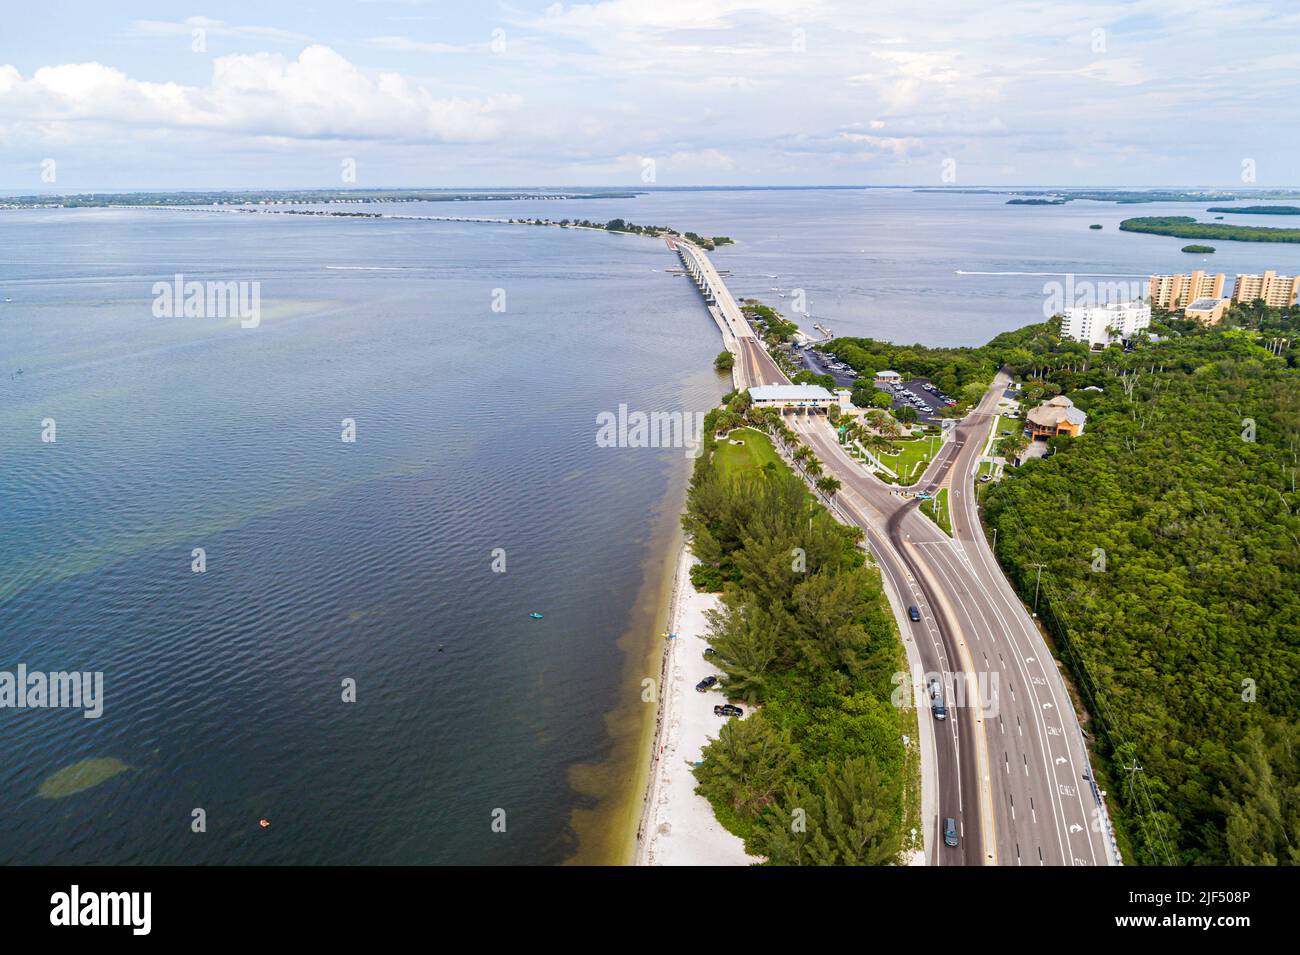 Fort ft. Myers Florida, McGregor Boulevard Sanibel Island Causeway, porta a pedaggio, vista aerea dall'alto, paesaggio naturale Foto Stock